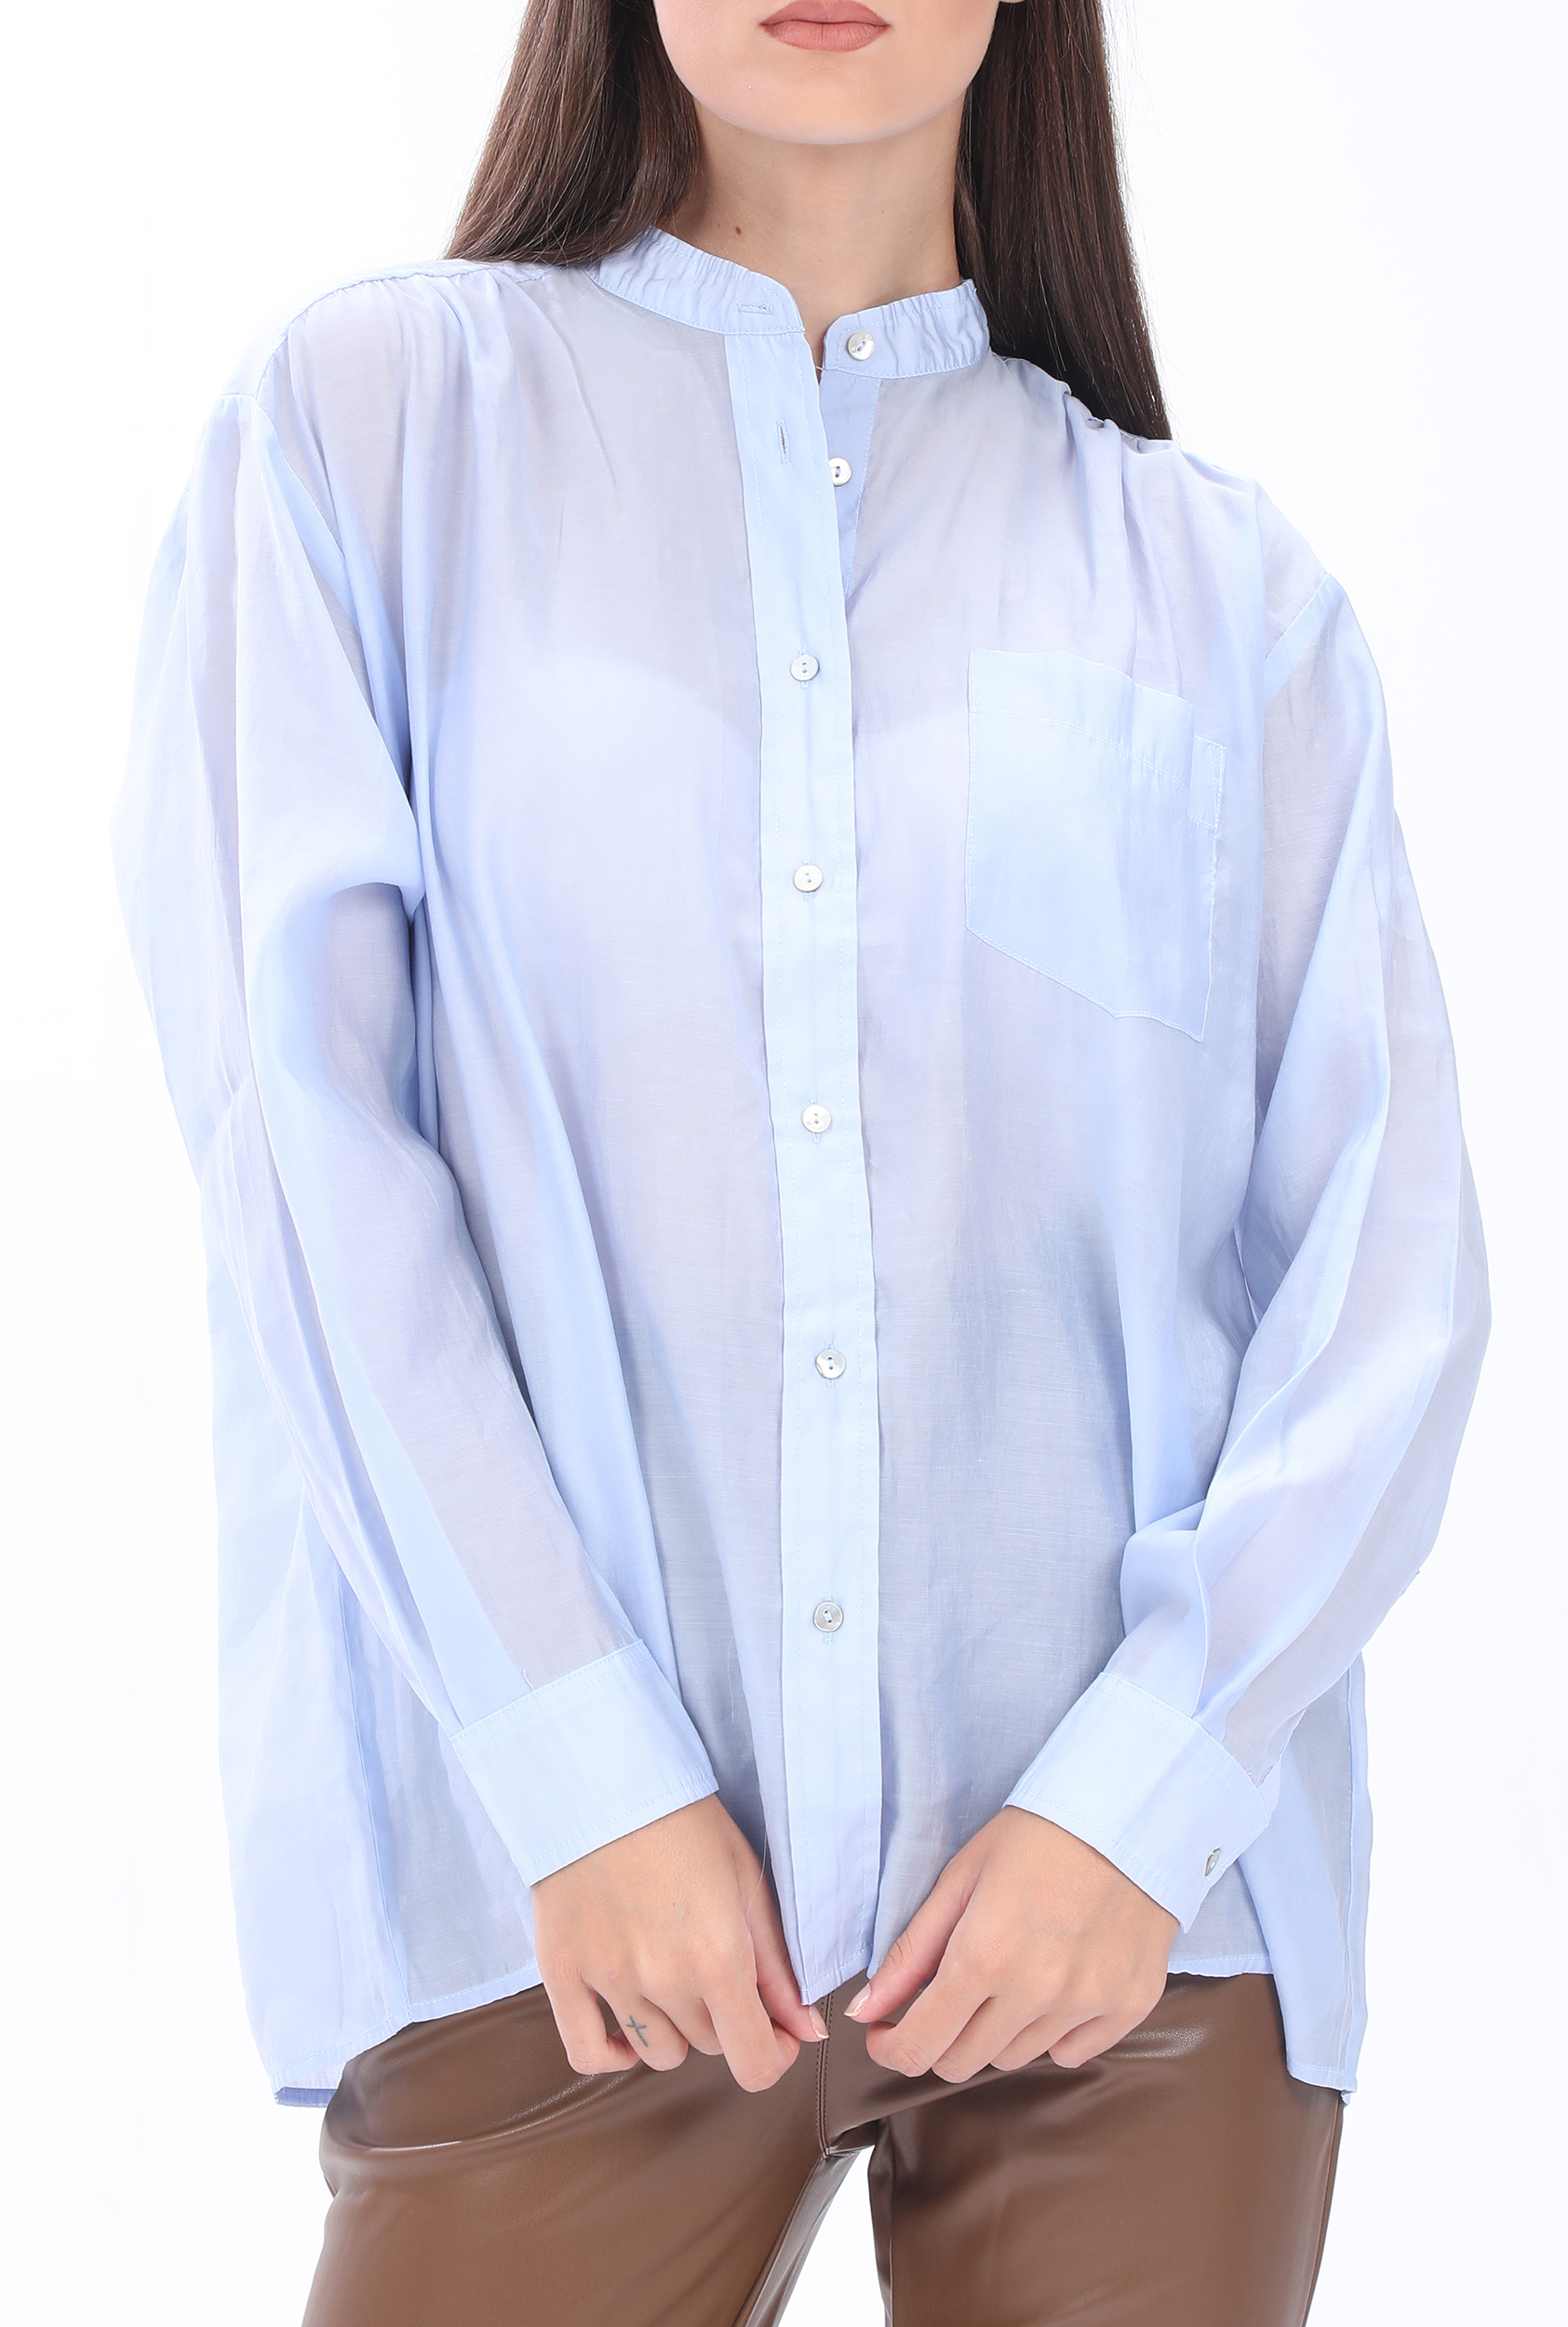 MOLLY BRACKEN – Γυναικείο πουκάμισο MOLLY BRACKEN μπλε 1809941.0-0017